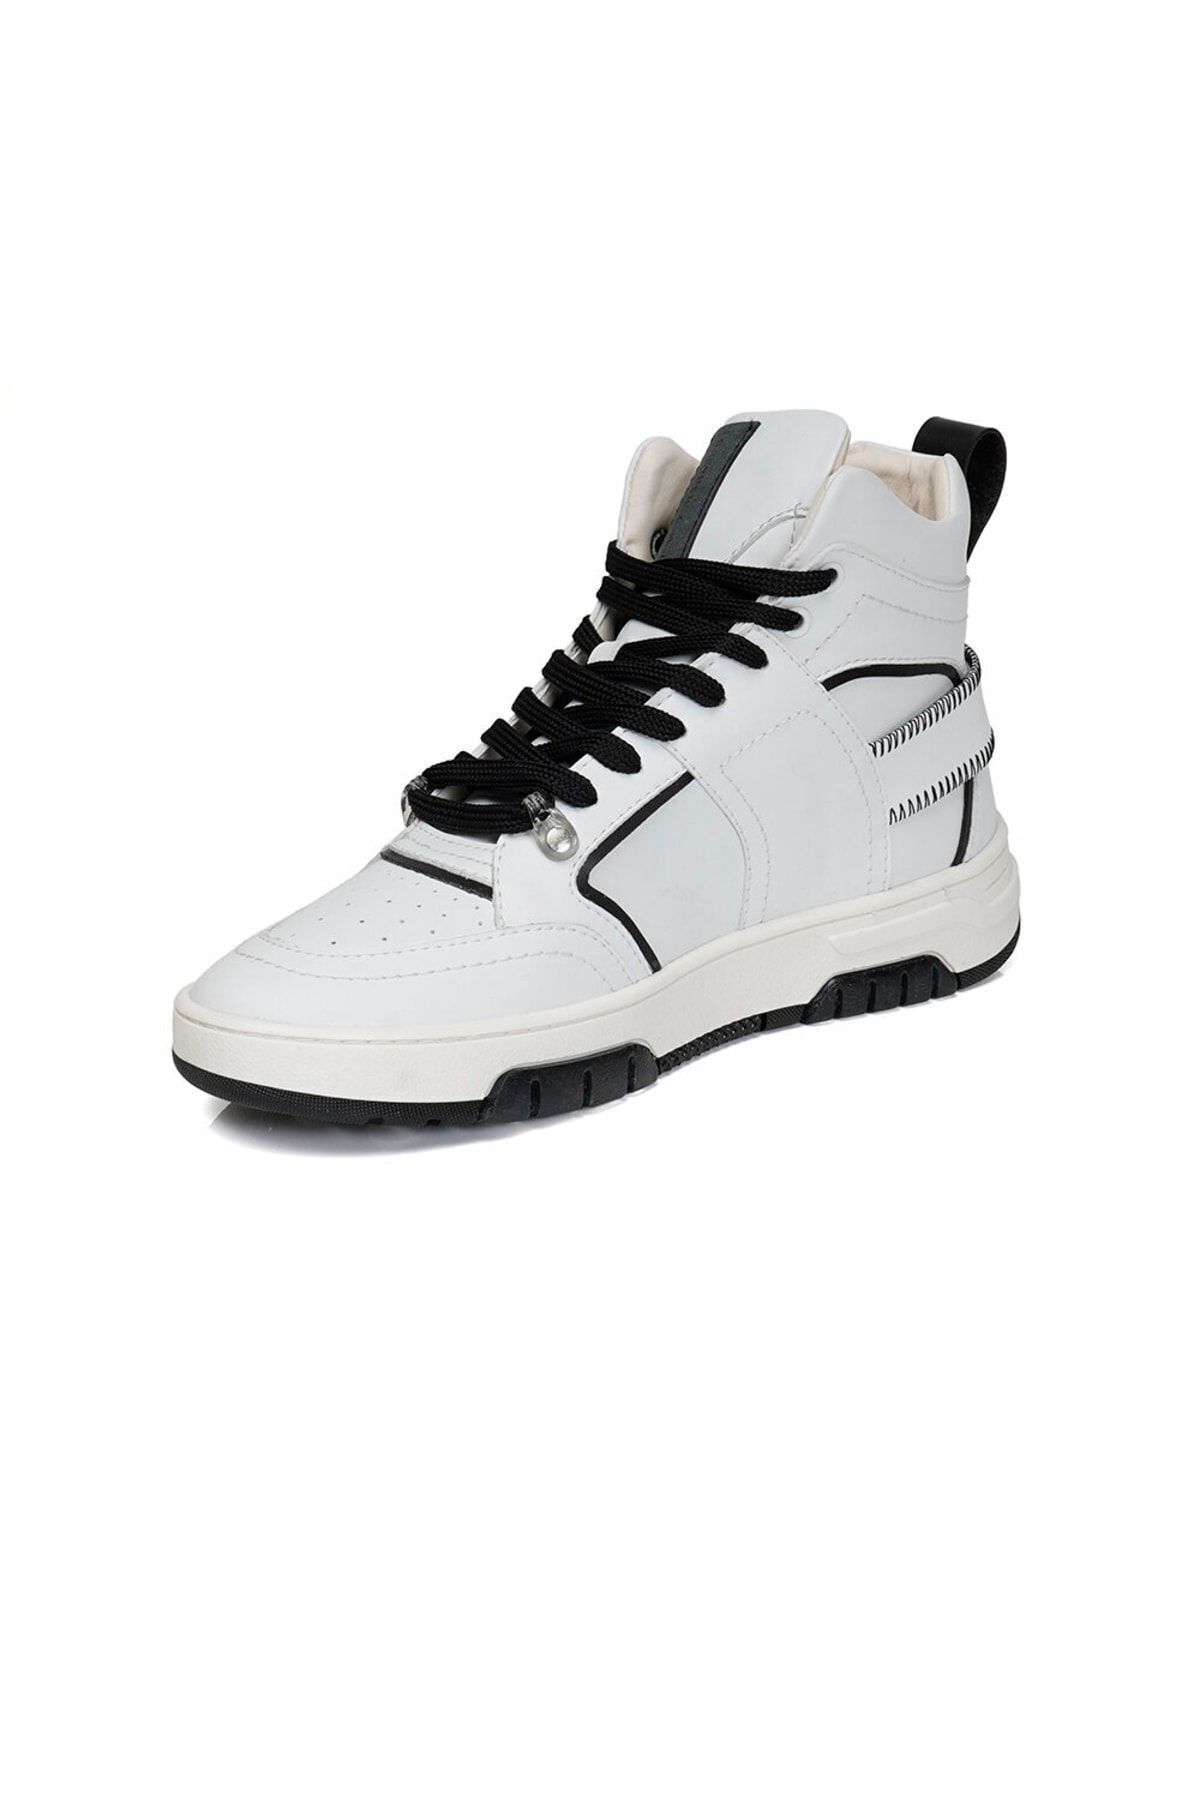 Greyder Lab Kadın Beyaz Siyah Sneaker Ayakkabı 3y2sa45091